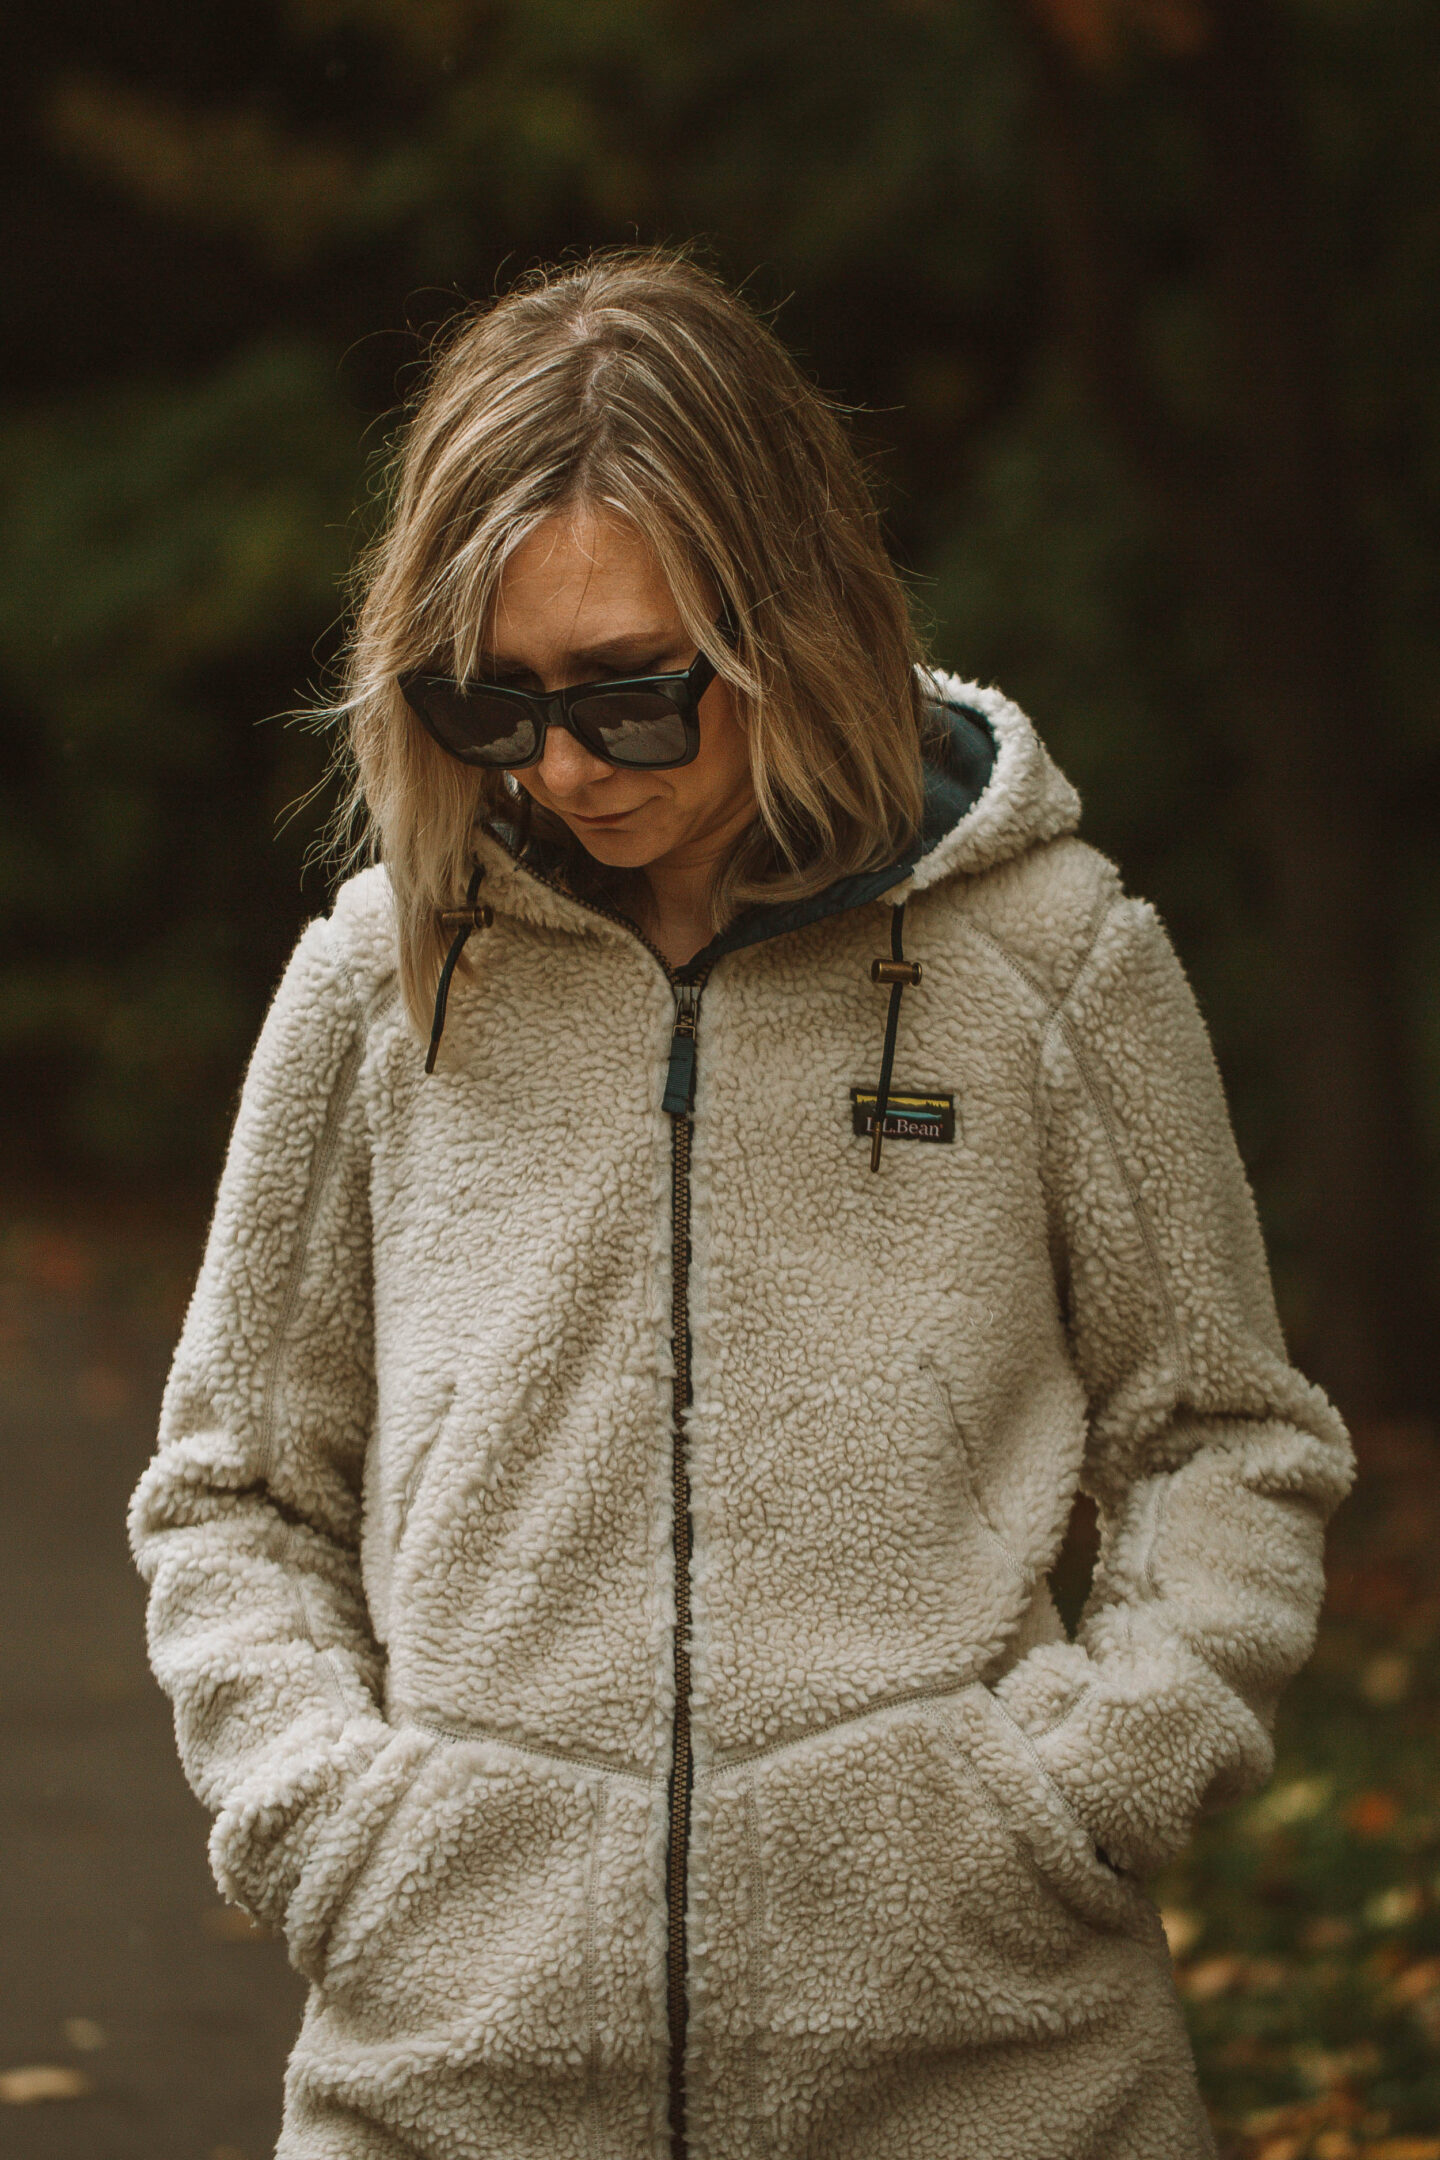 lululemon align legging review, sherpa fleece jacket